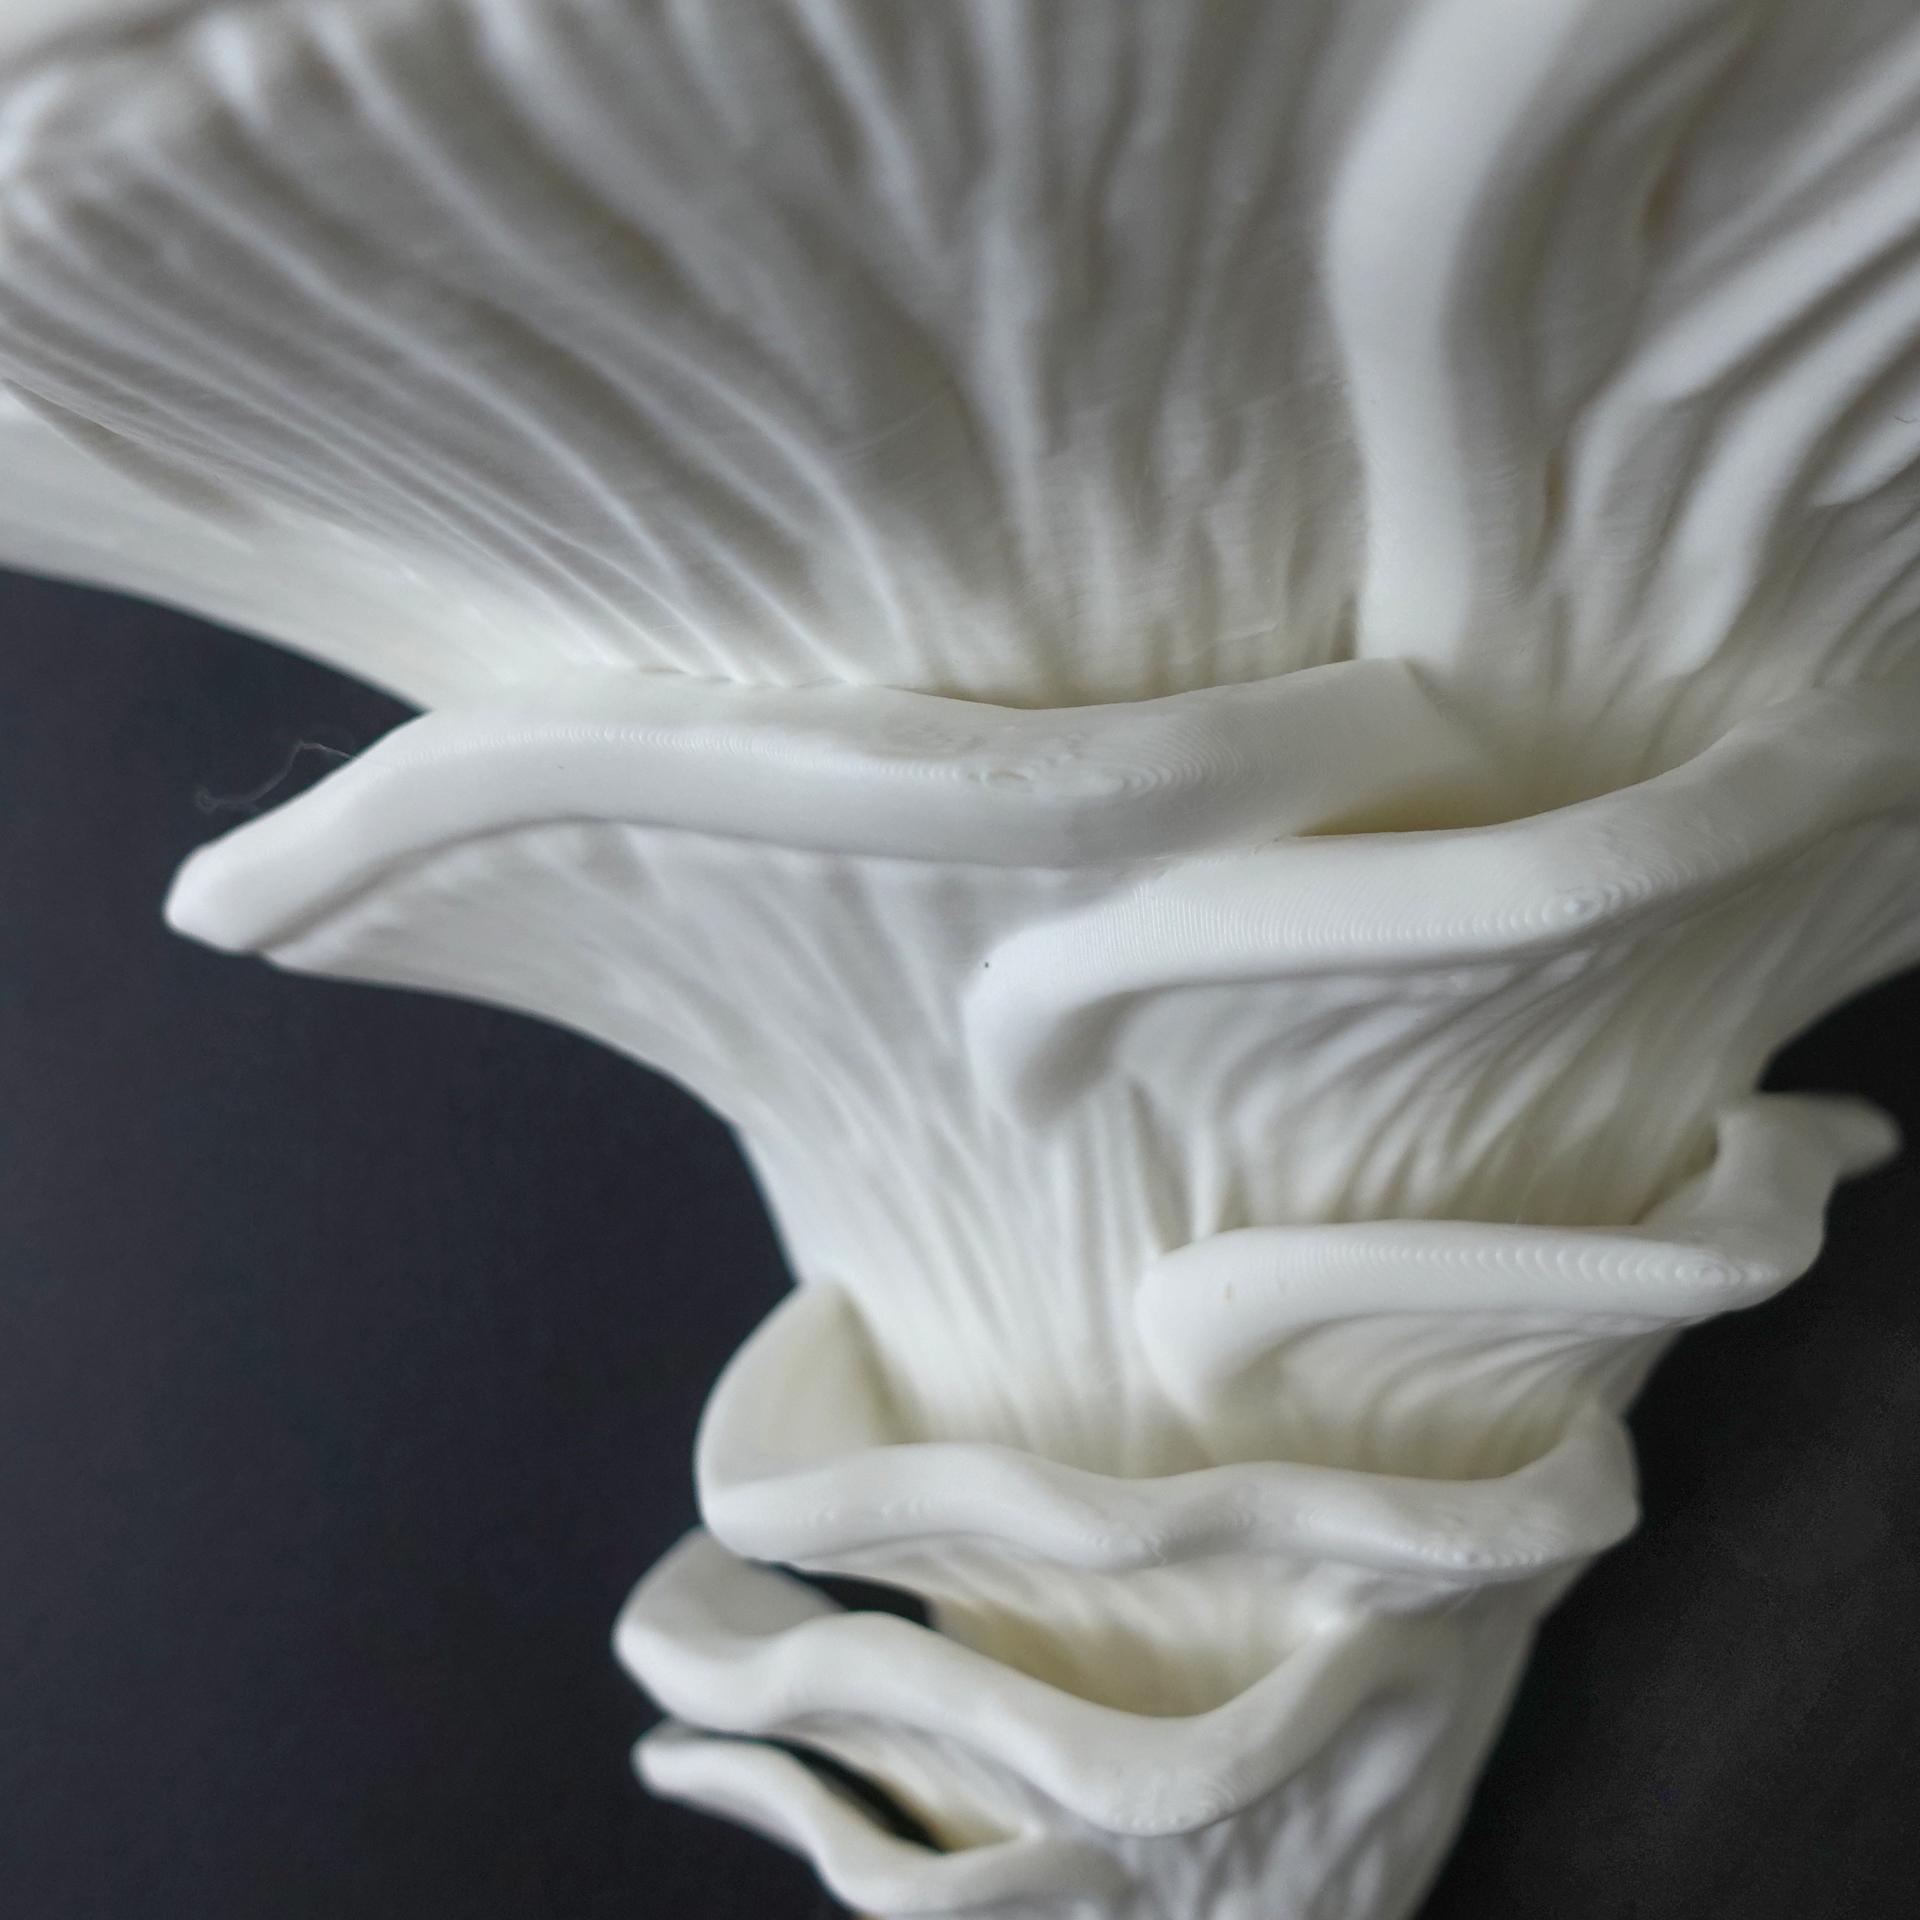 Mushroom shelf “Pleurotus Djamor” 3d model